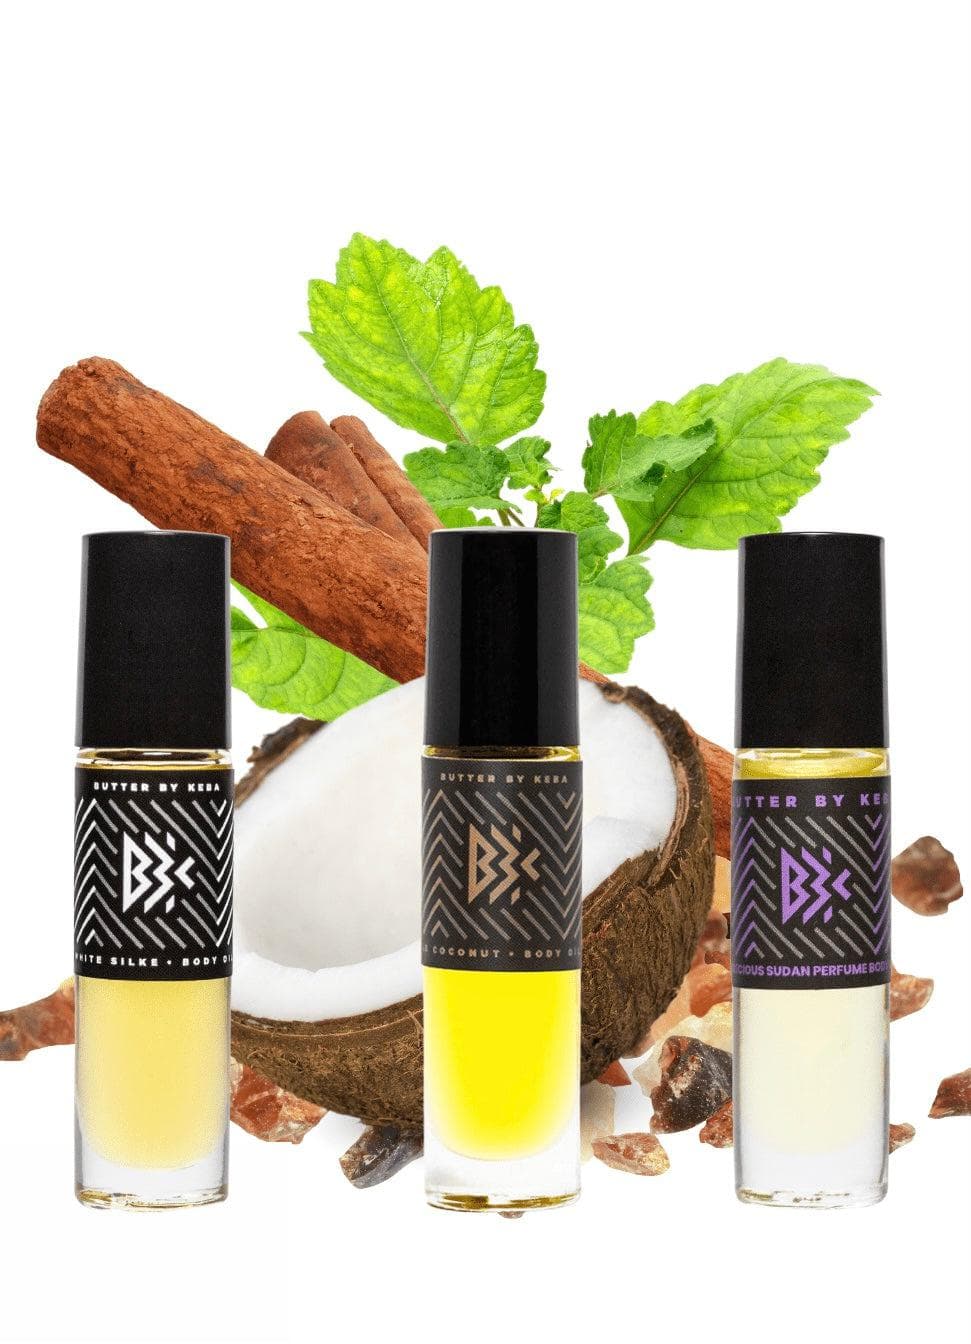 White Silke Perfume Wood Spice Body Oil Trio